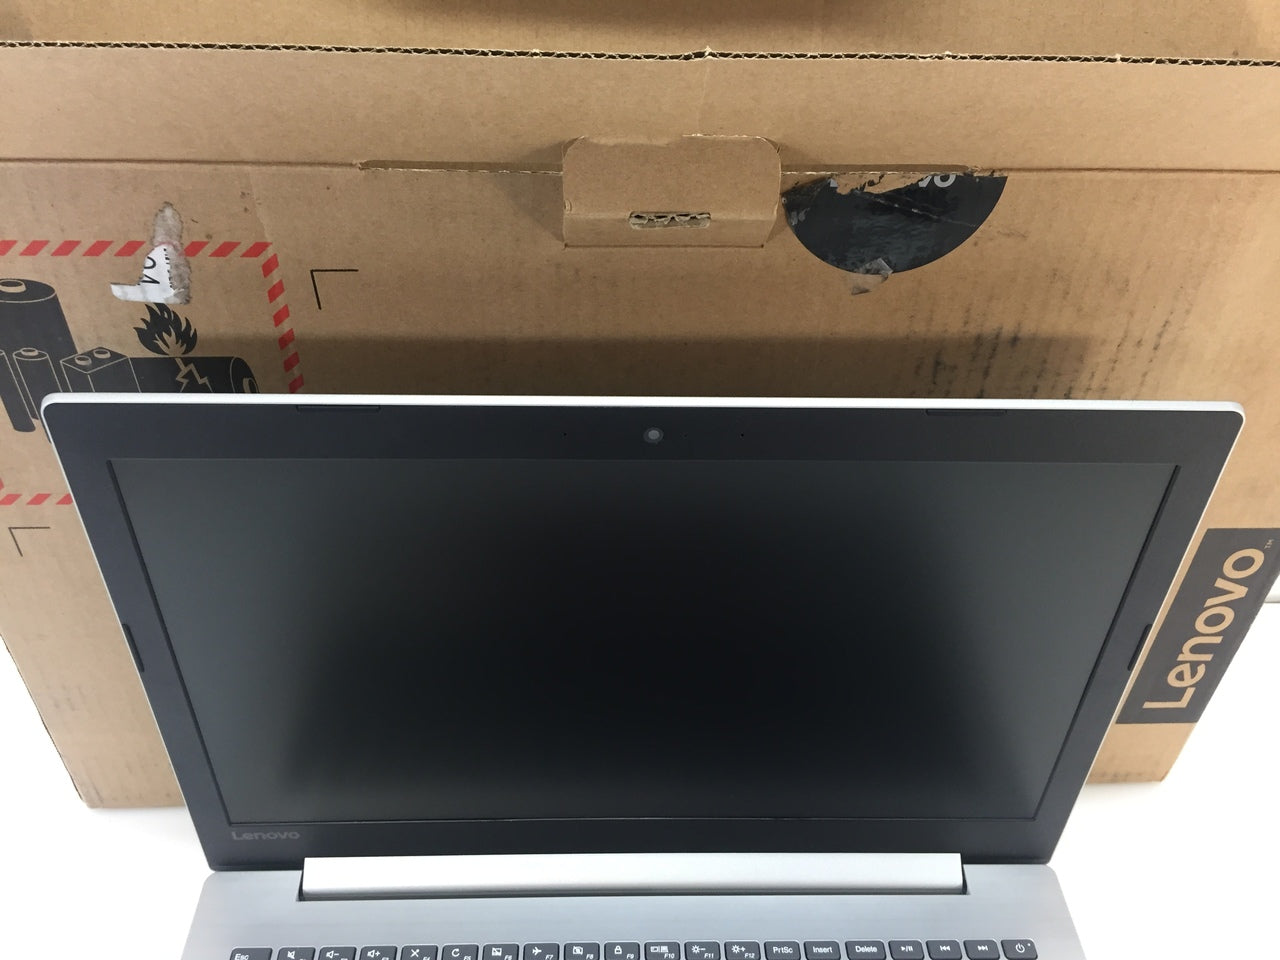 Laptop Lenovo ideapad 320-15iKB 15.6 in. Intel i7-7500u 2.7GHz 8GB ...